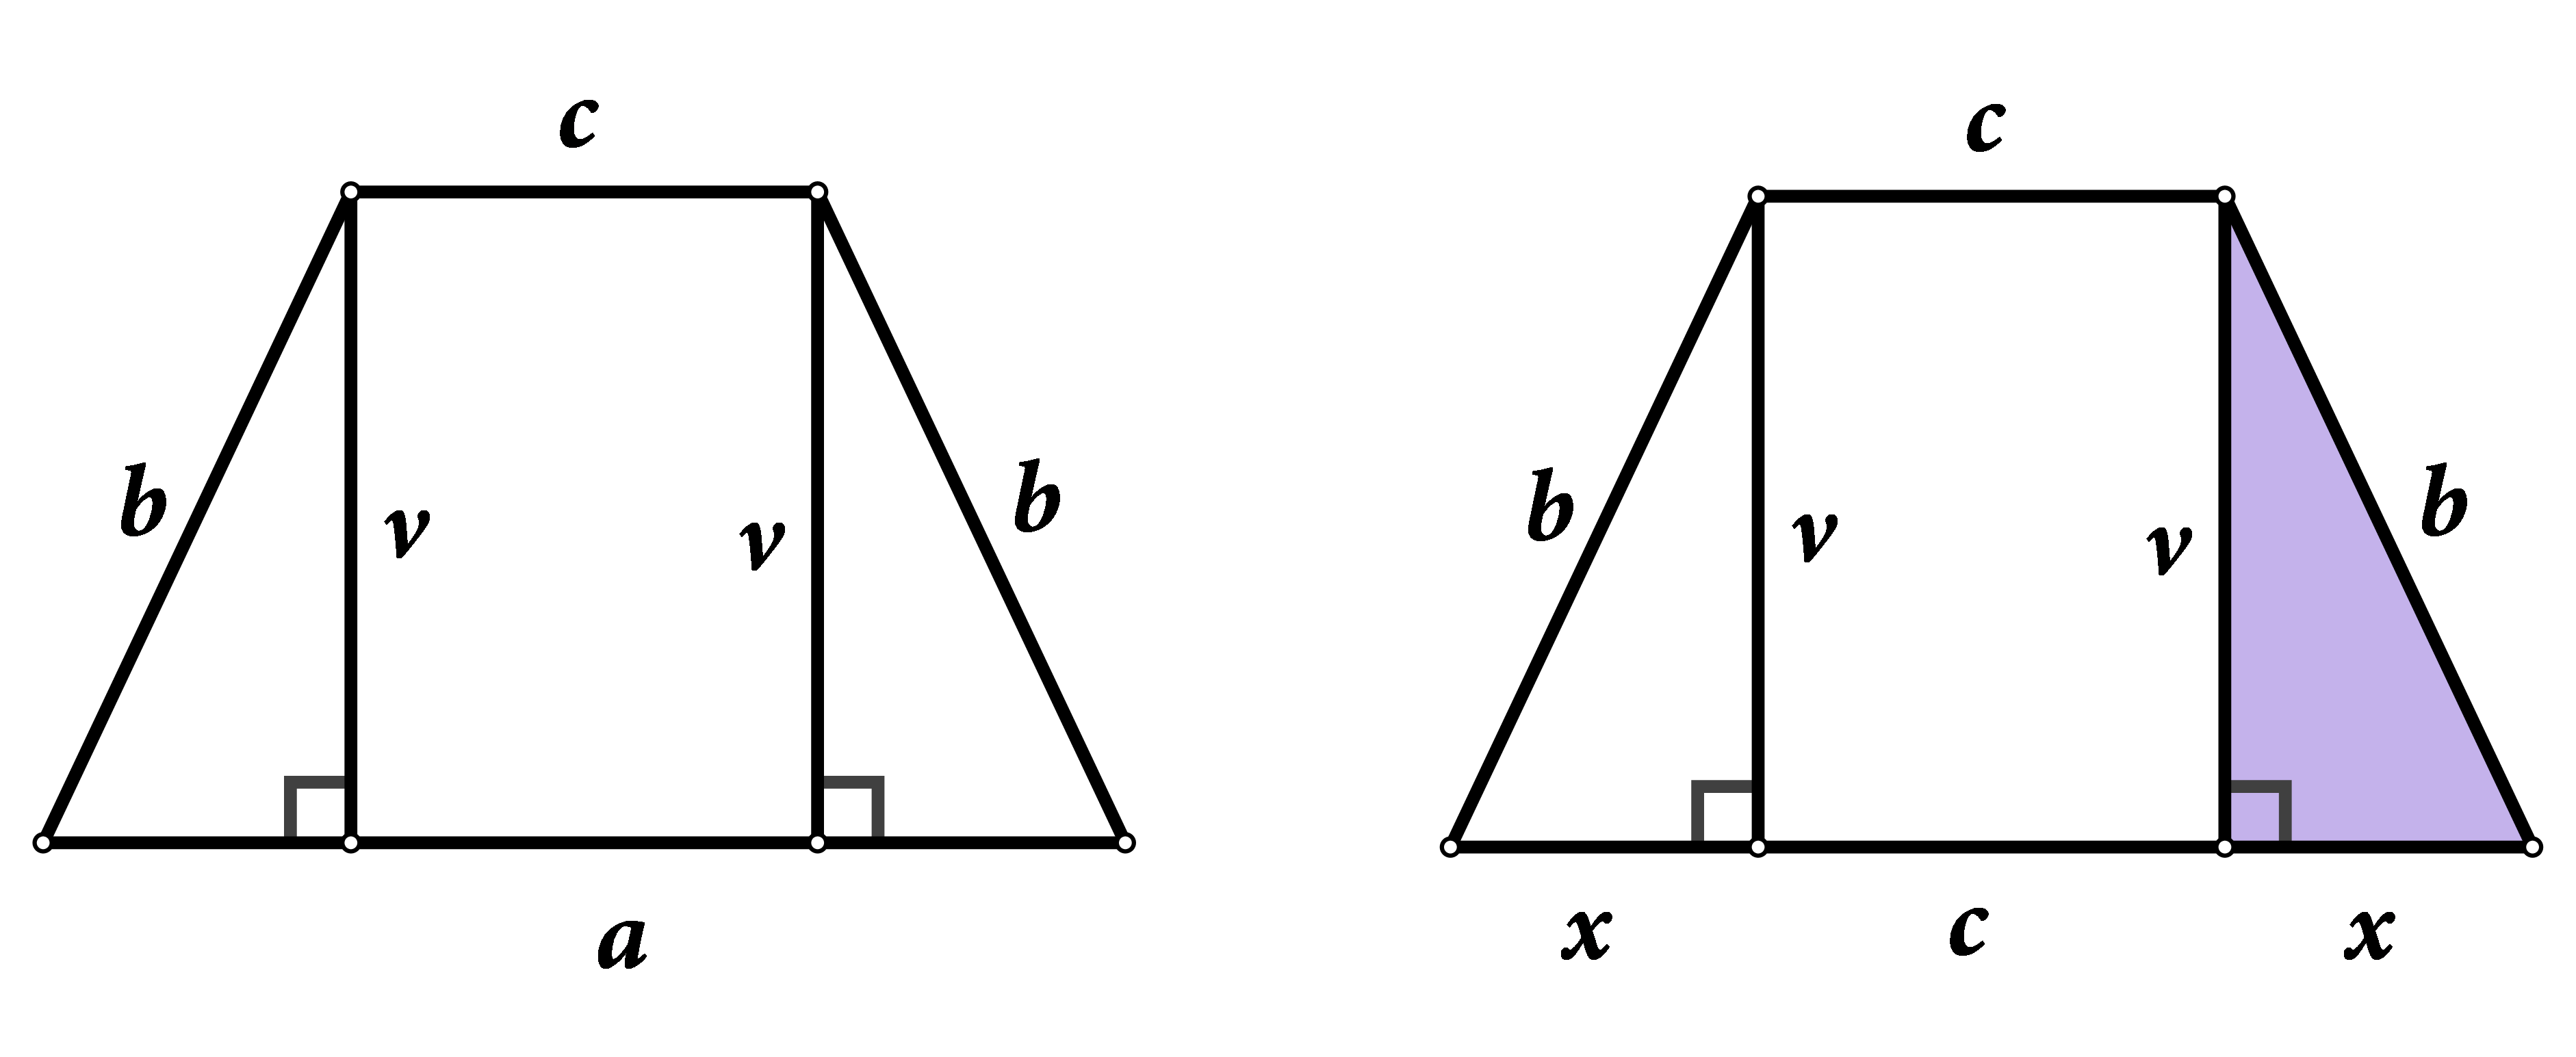 Na slici je jednakokračni trapez podijeljen na pravokutnik i dva sukladna pravokutna trokuta.